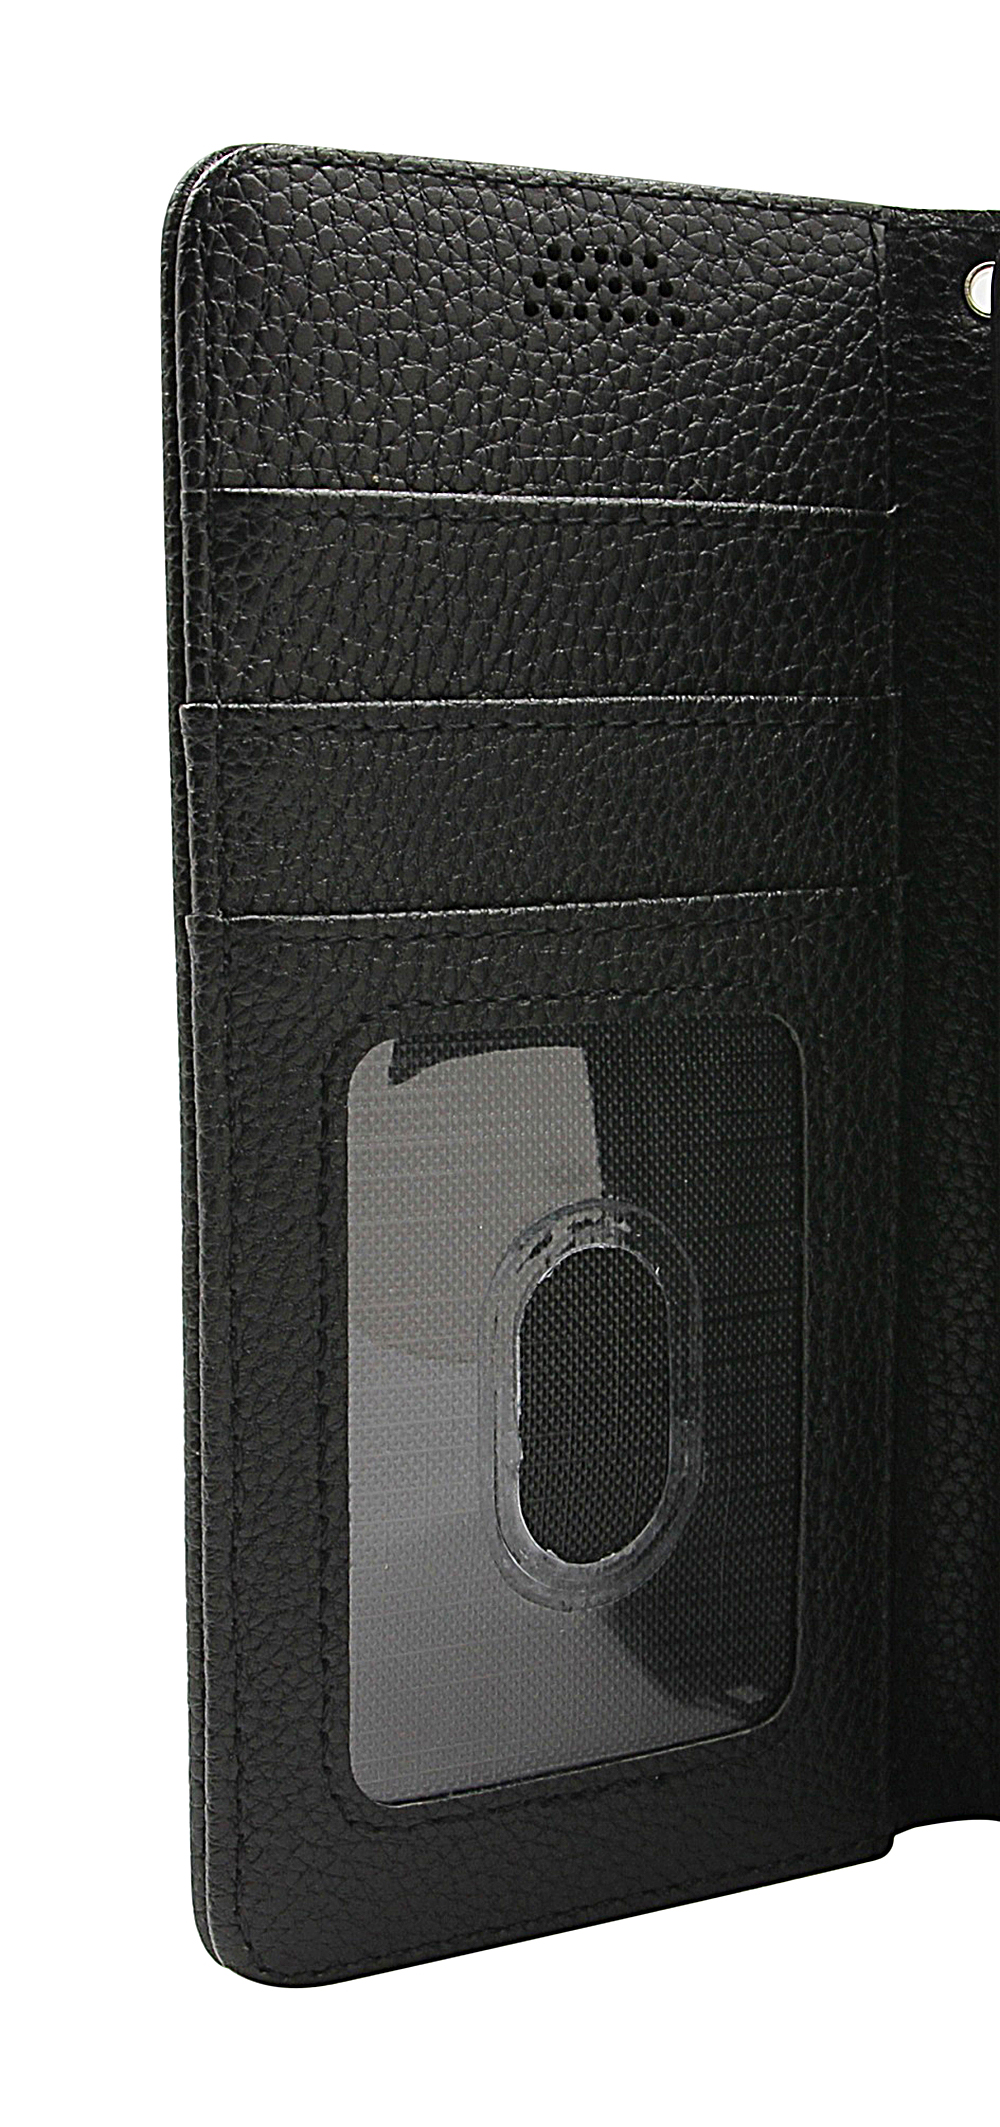 New Standcase Wallet Motorola Moto G4 Play